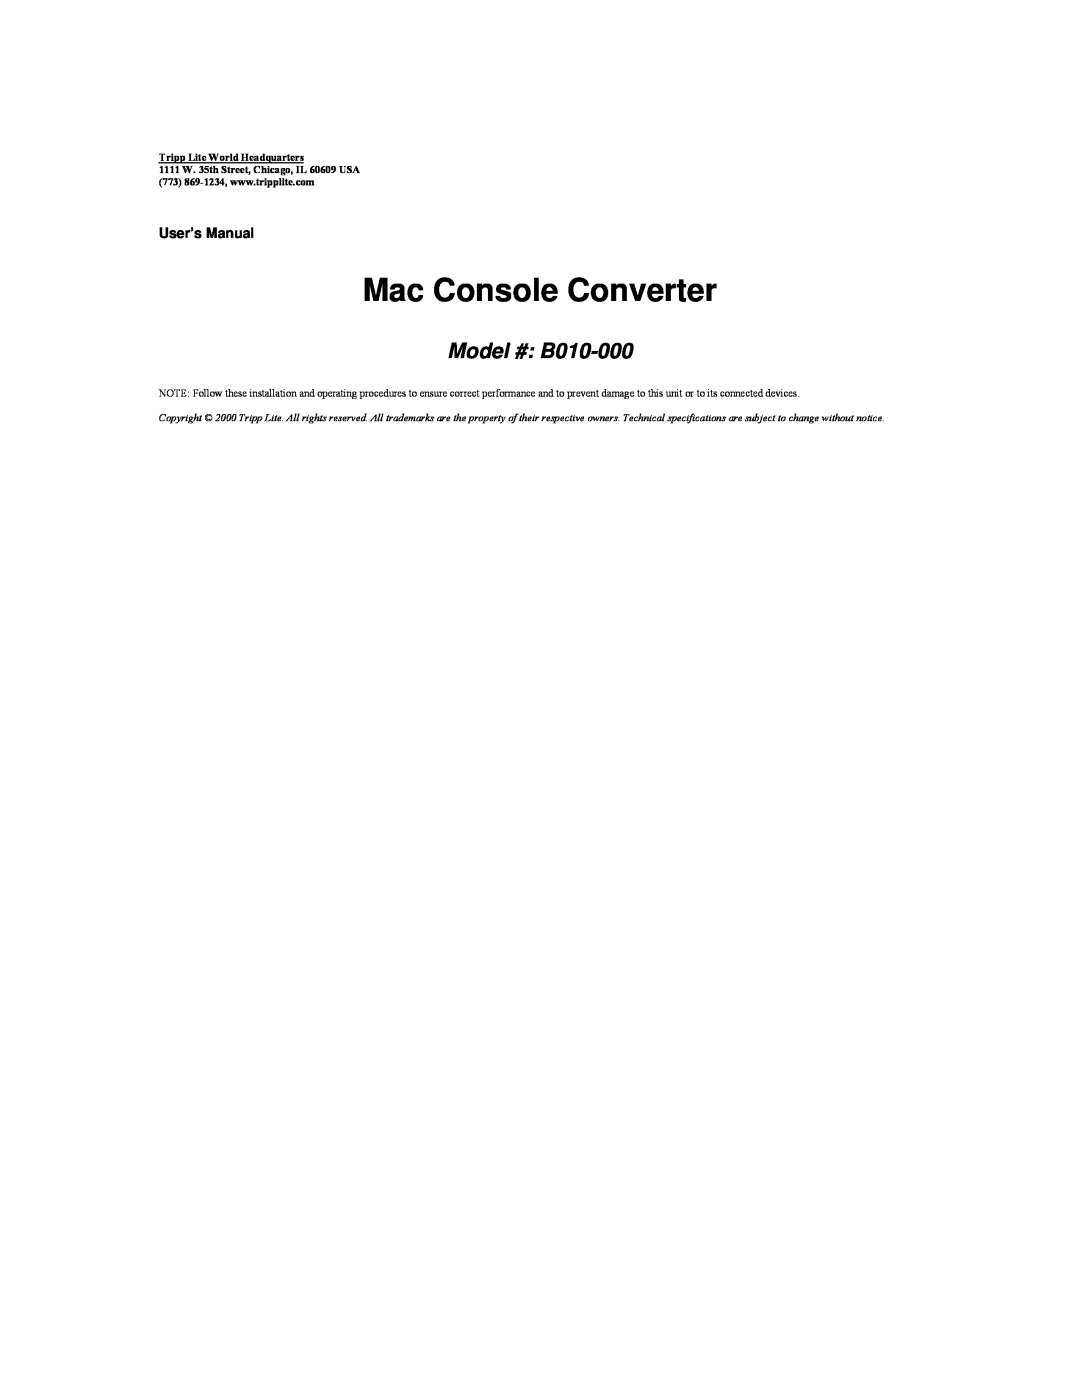 Tripp Lite user manual Model # B010-000, Mac Console Converter, User’s Manual, Tripp Lite World Headquarters 